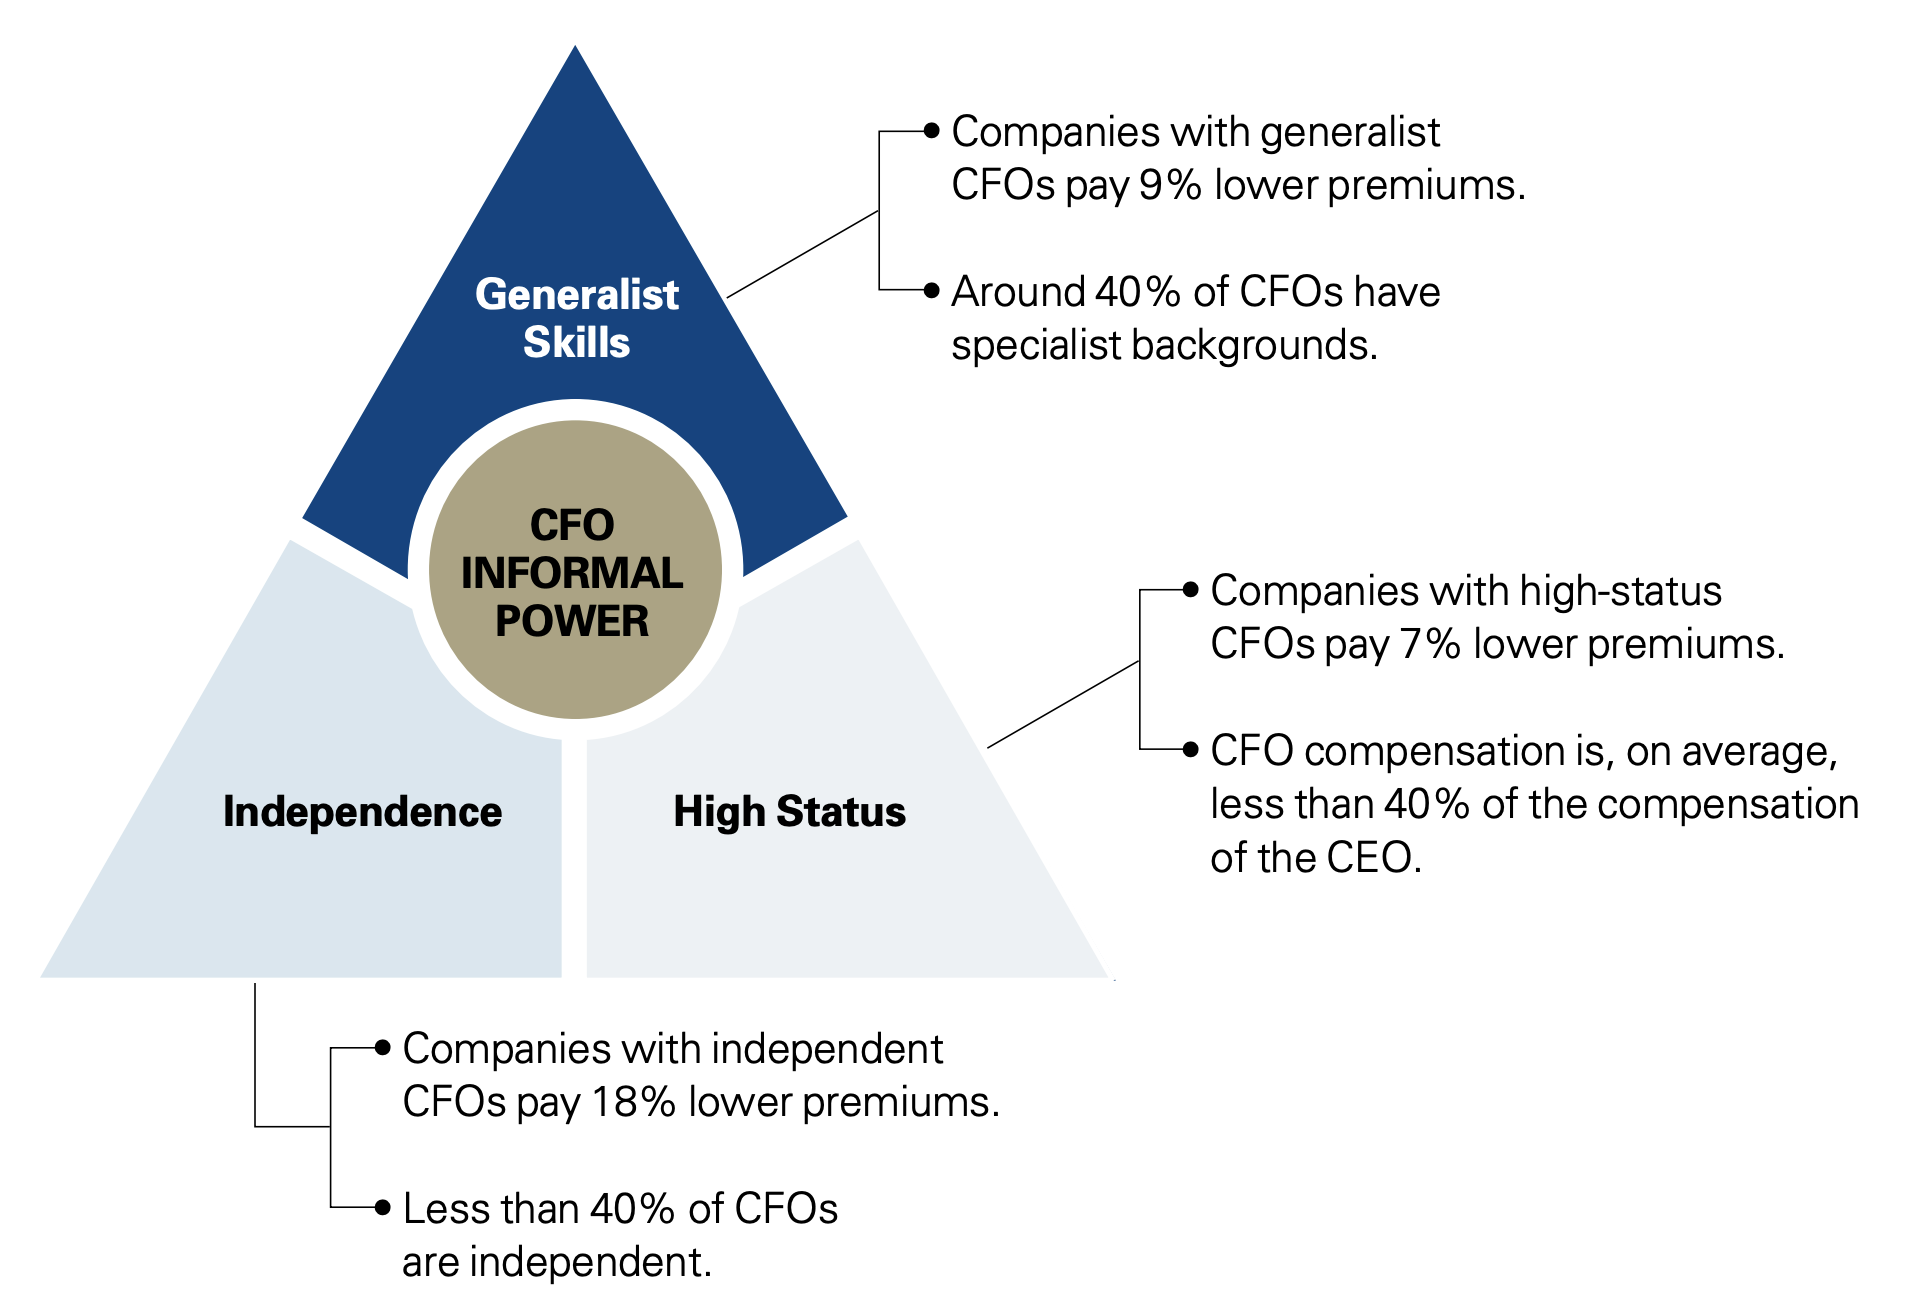 How CFOs Gain Influence
